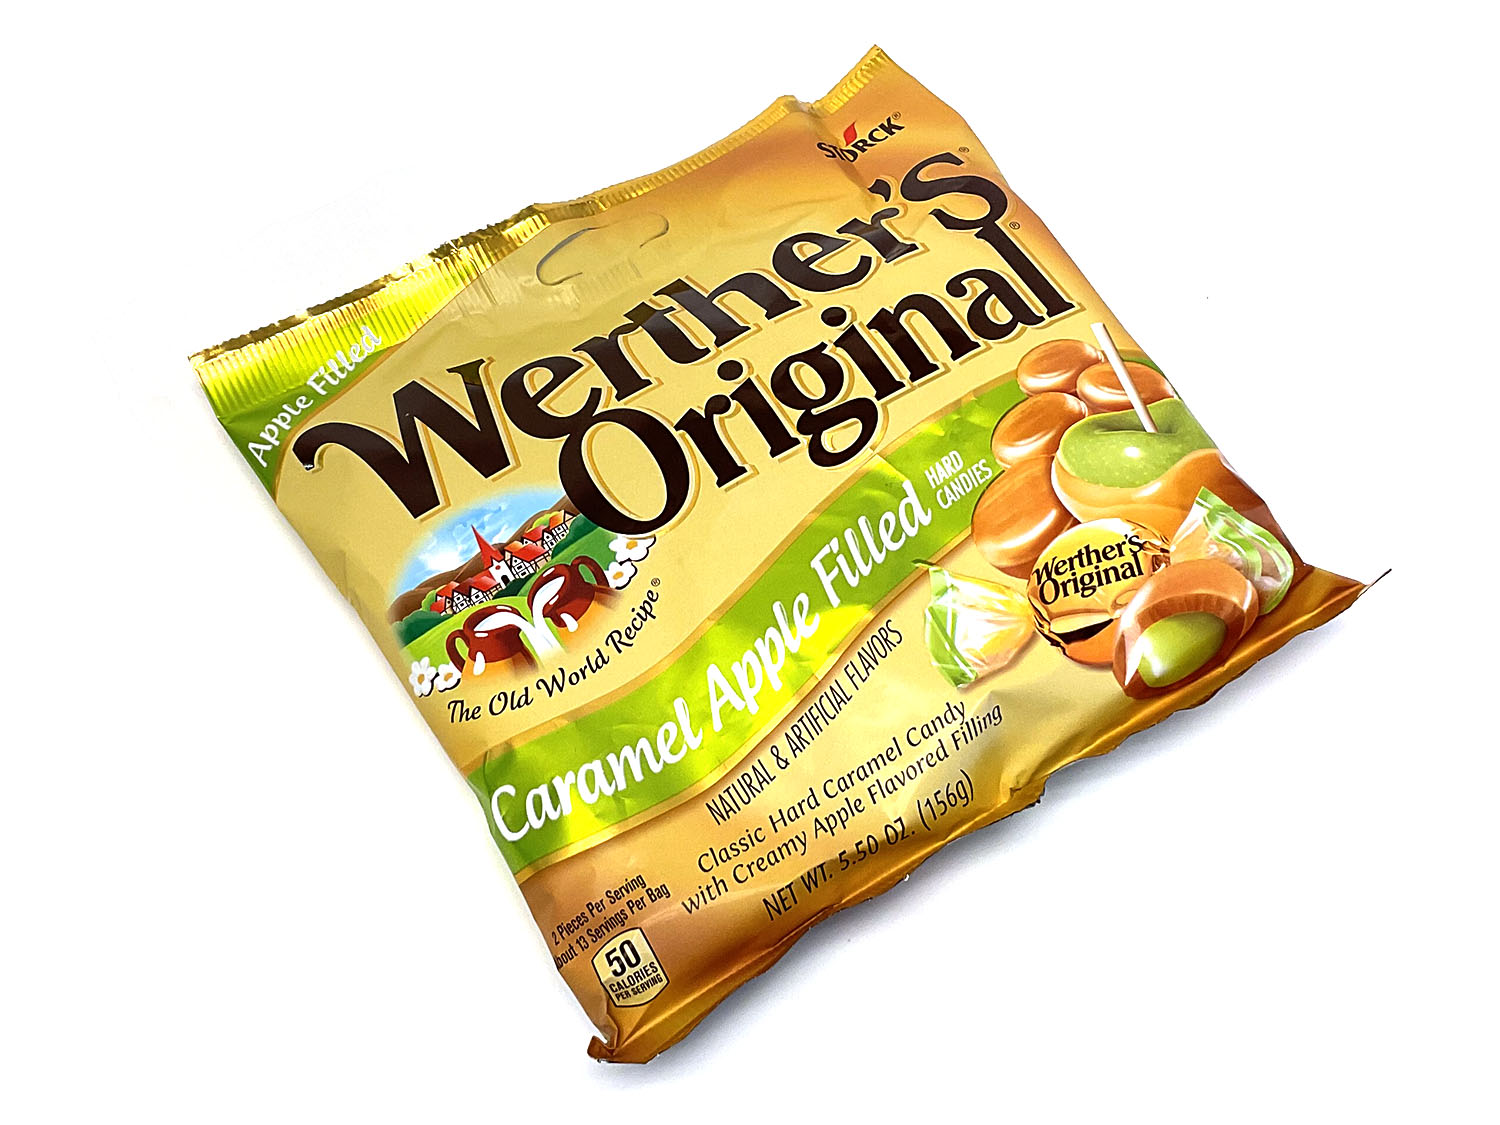 Werther's Caramel Apple Filled Candies - 5.5 oz bag